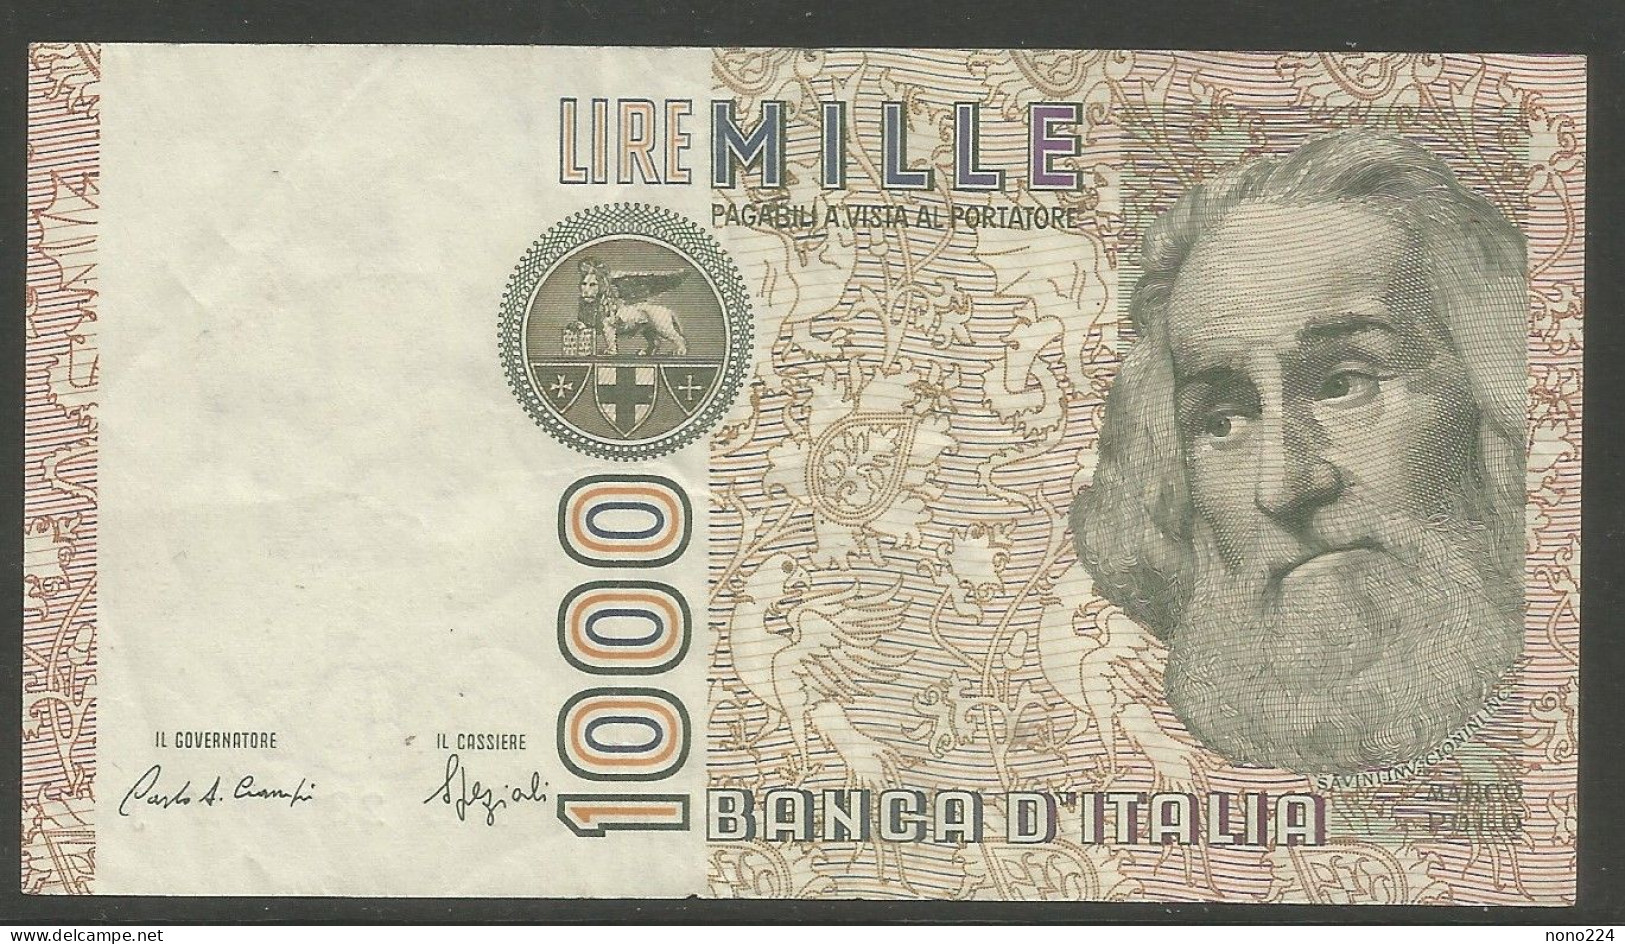 Billet De 1982 ( Italie 1000 Lire ) - 1.000 Lire